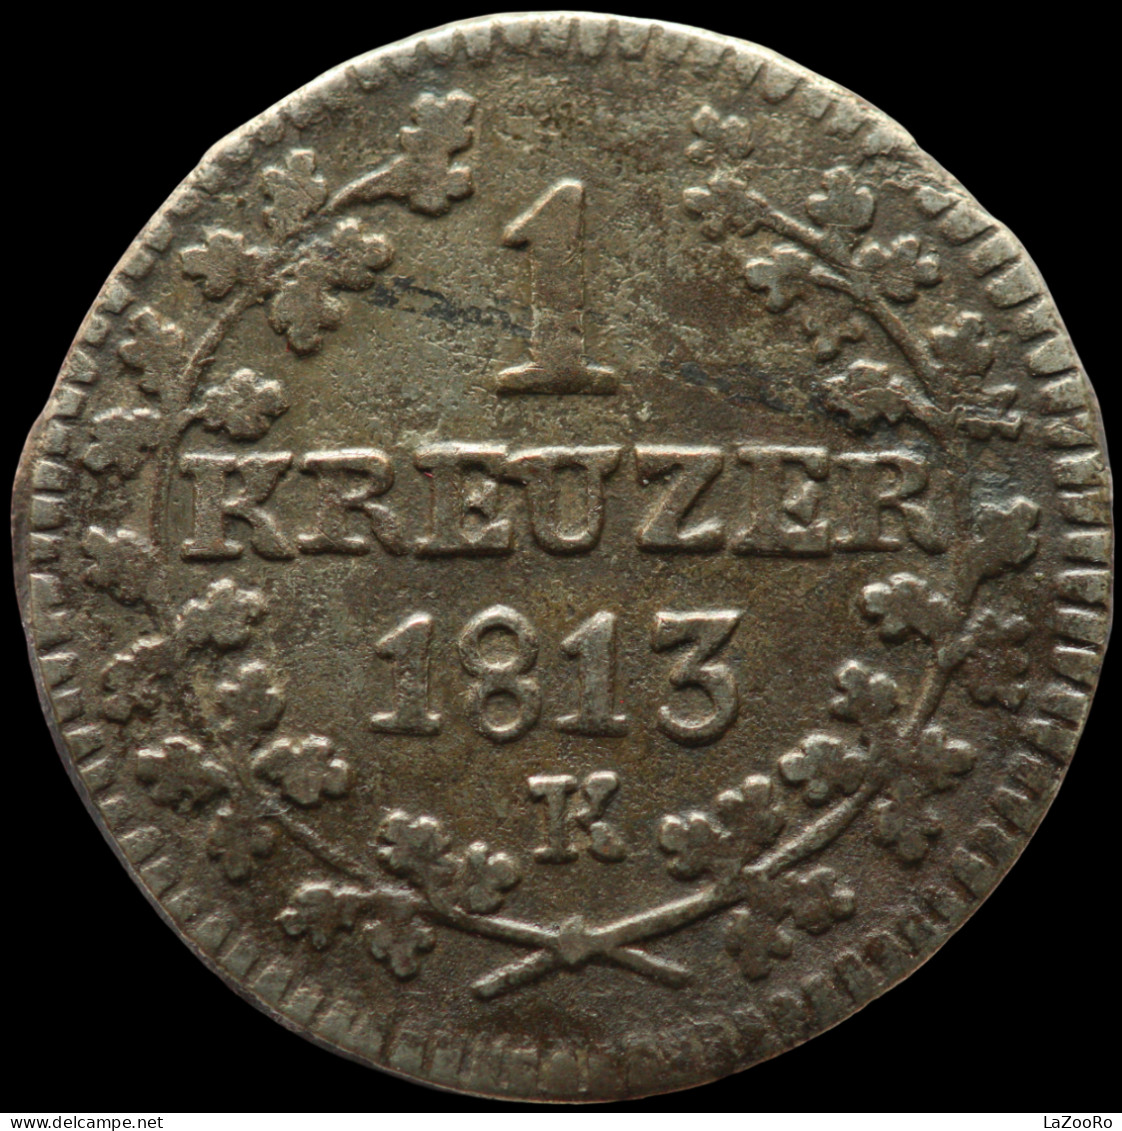 LaZooRo: Switzerland SAINT GALL 1 Kreuzer 1813 K VF - Silver - Kanton St. Gallen